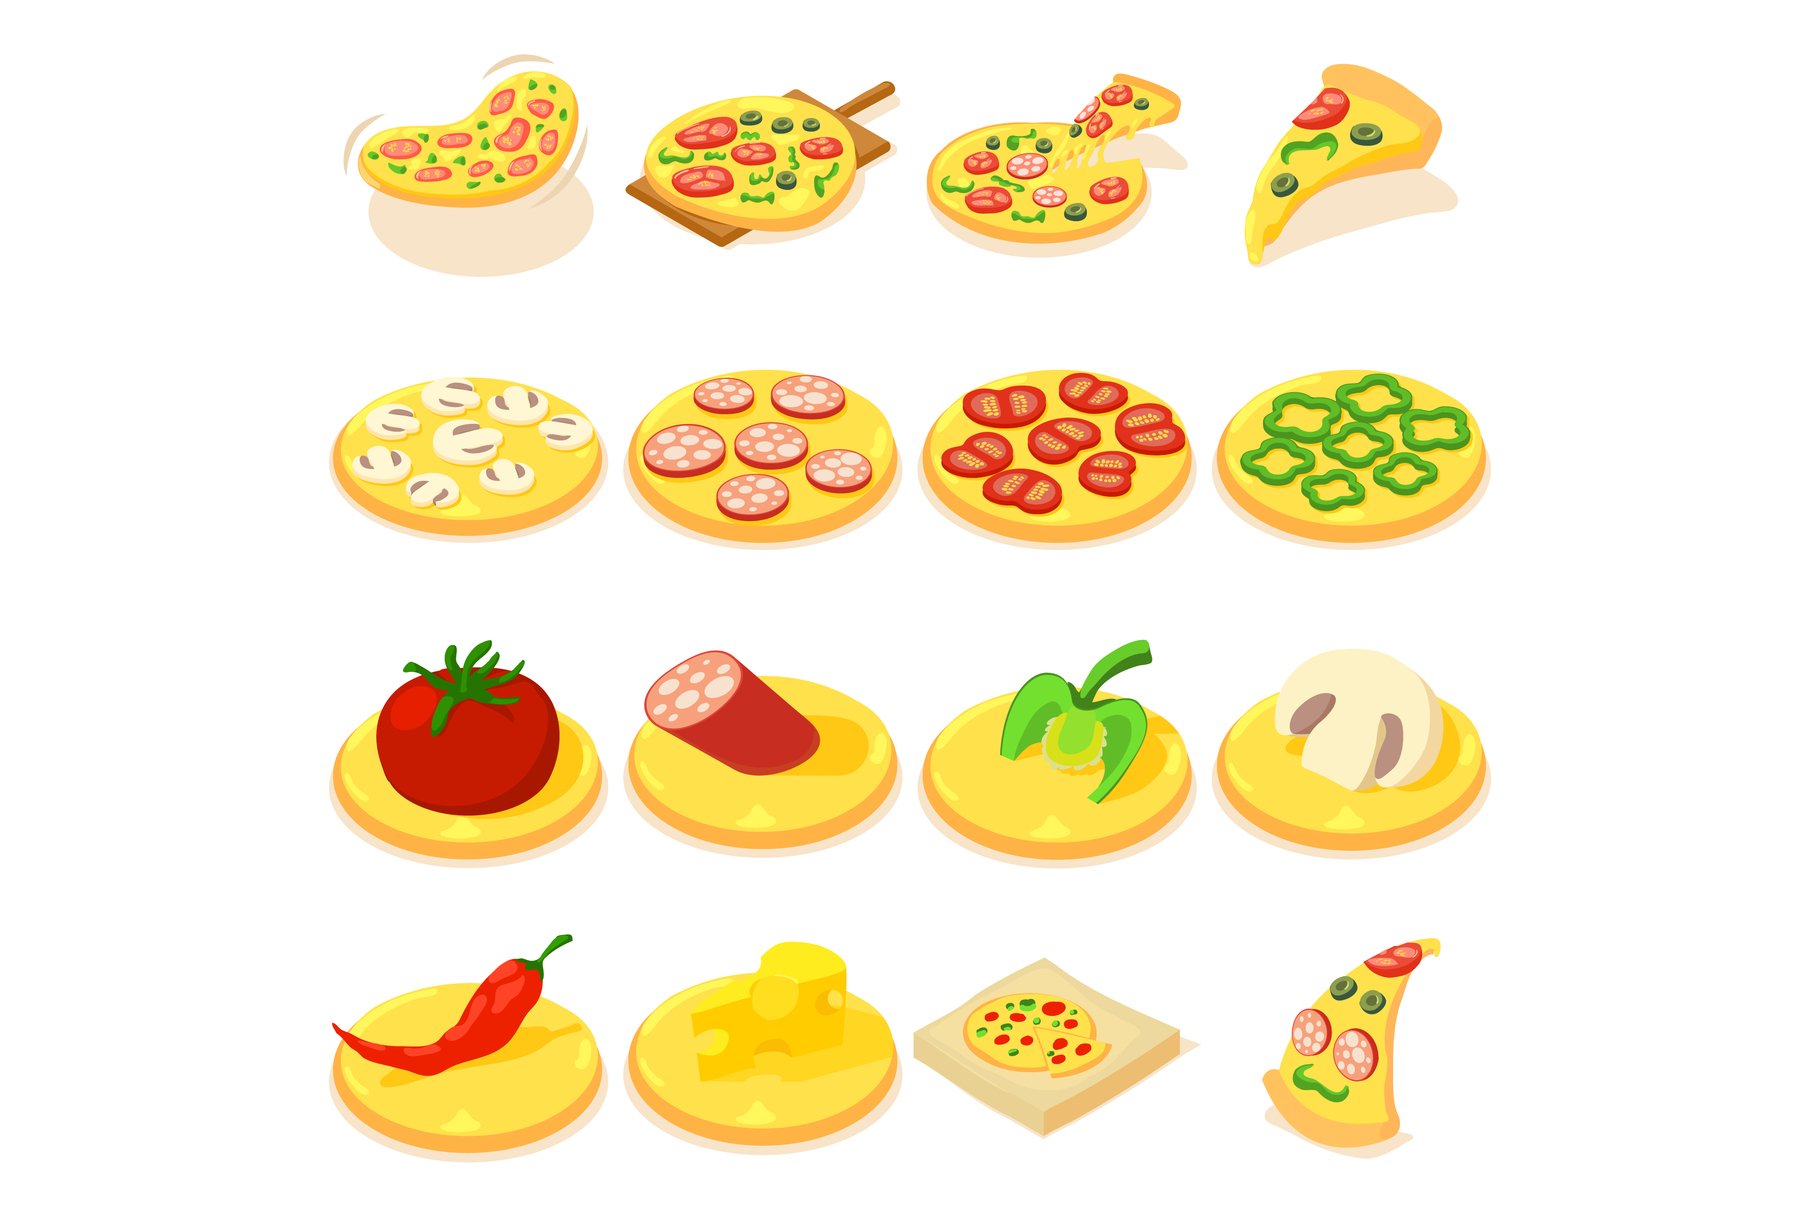 Pizza icons set, isometric style cover image.